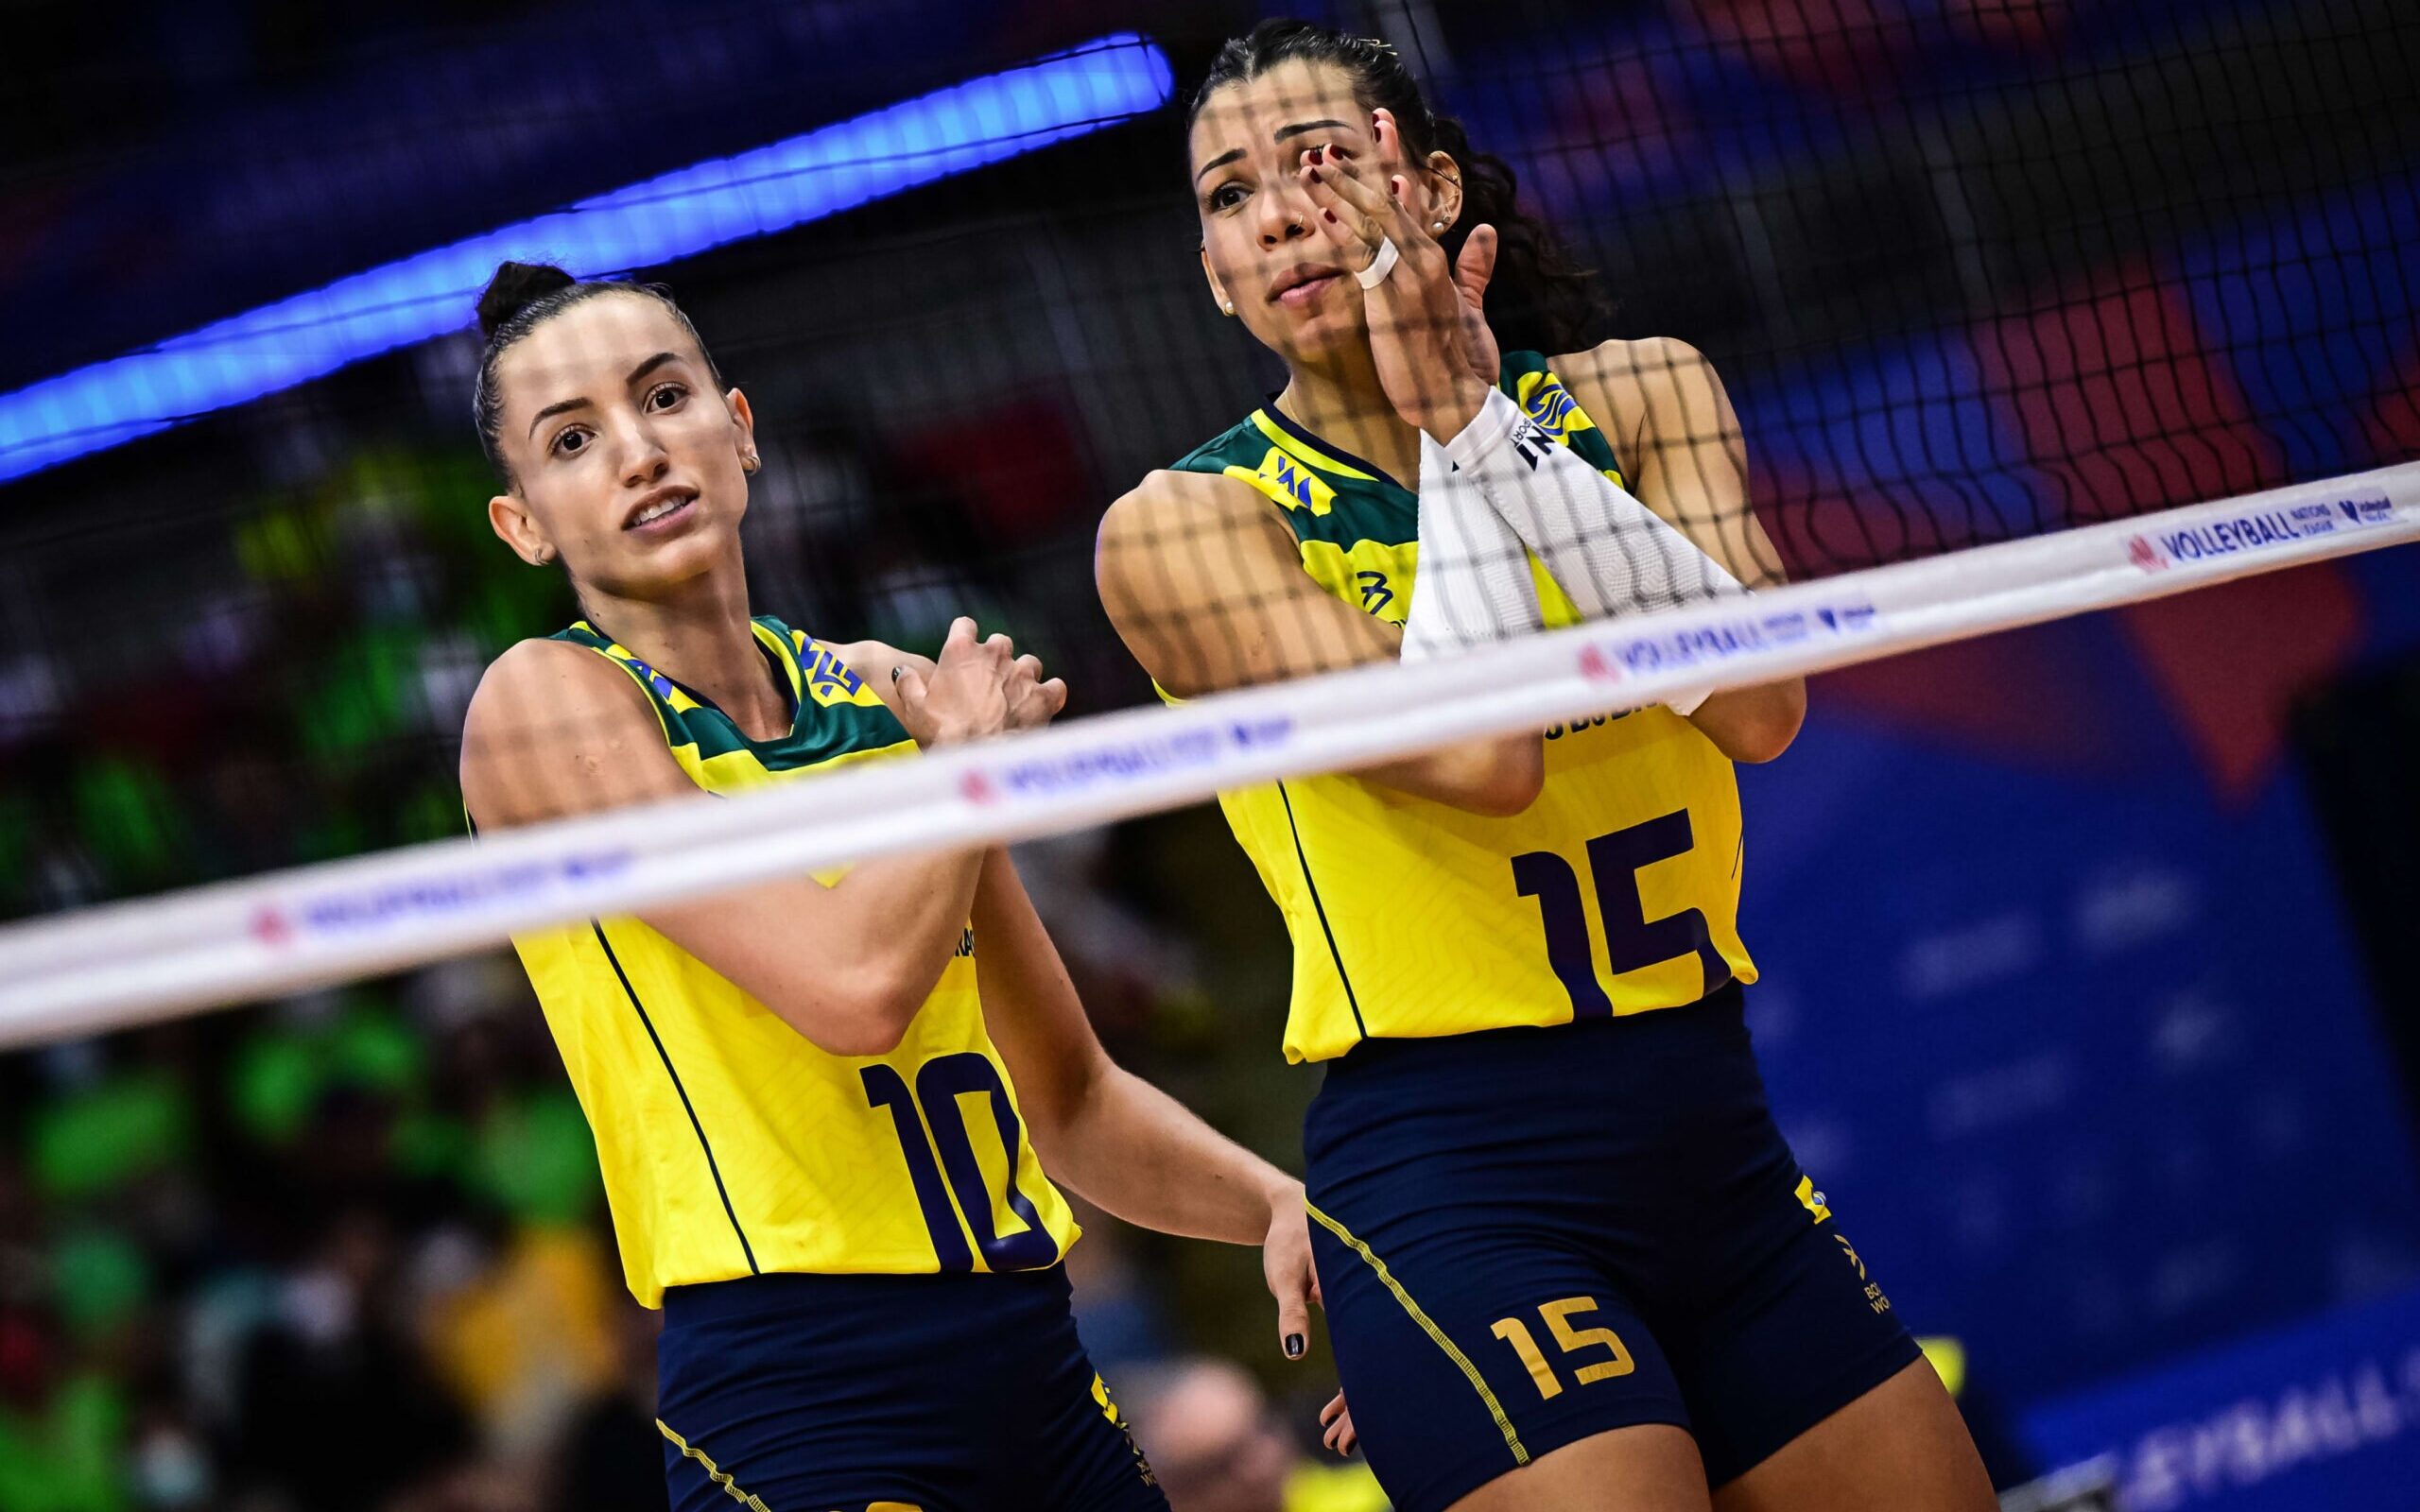 Brasil derrota Itália no tie-break no Mundial de Vôlei feminino